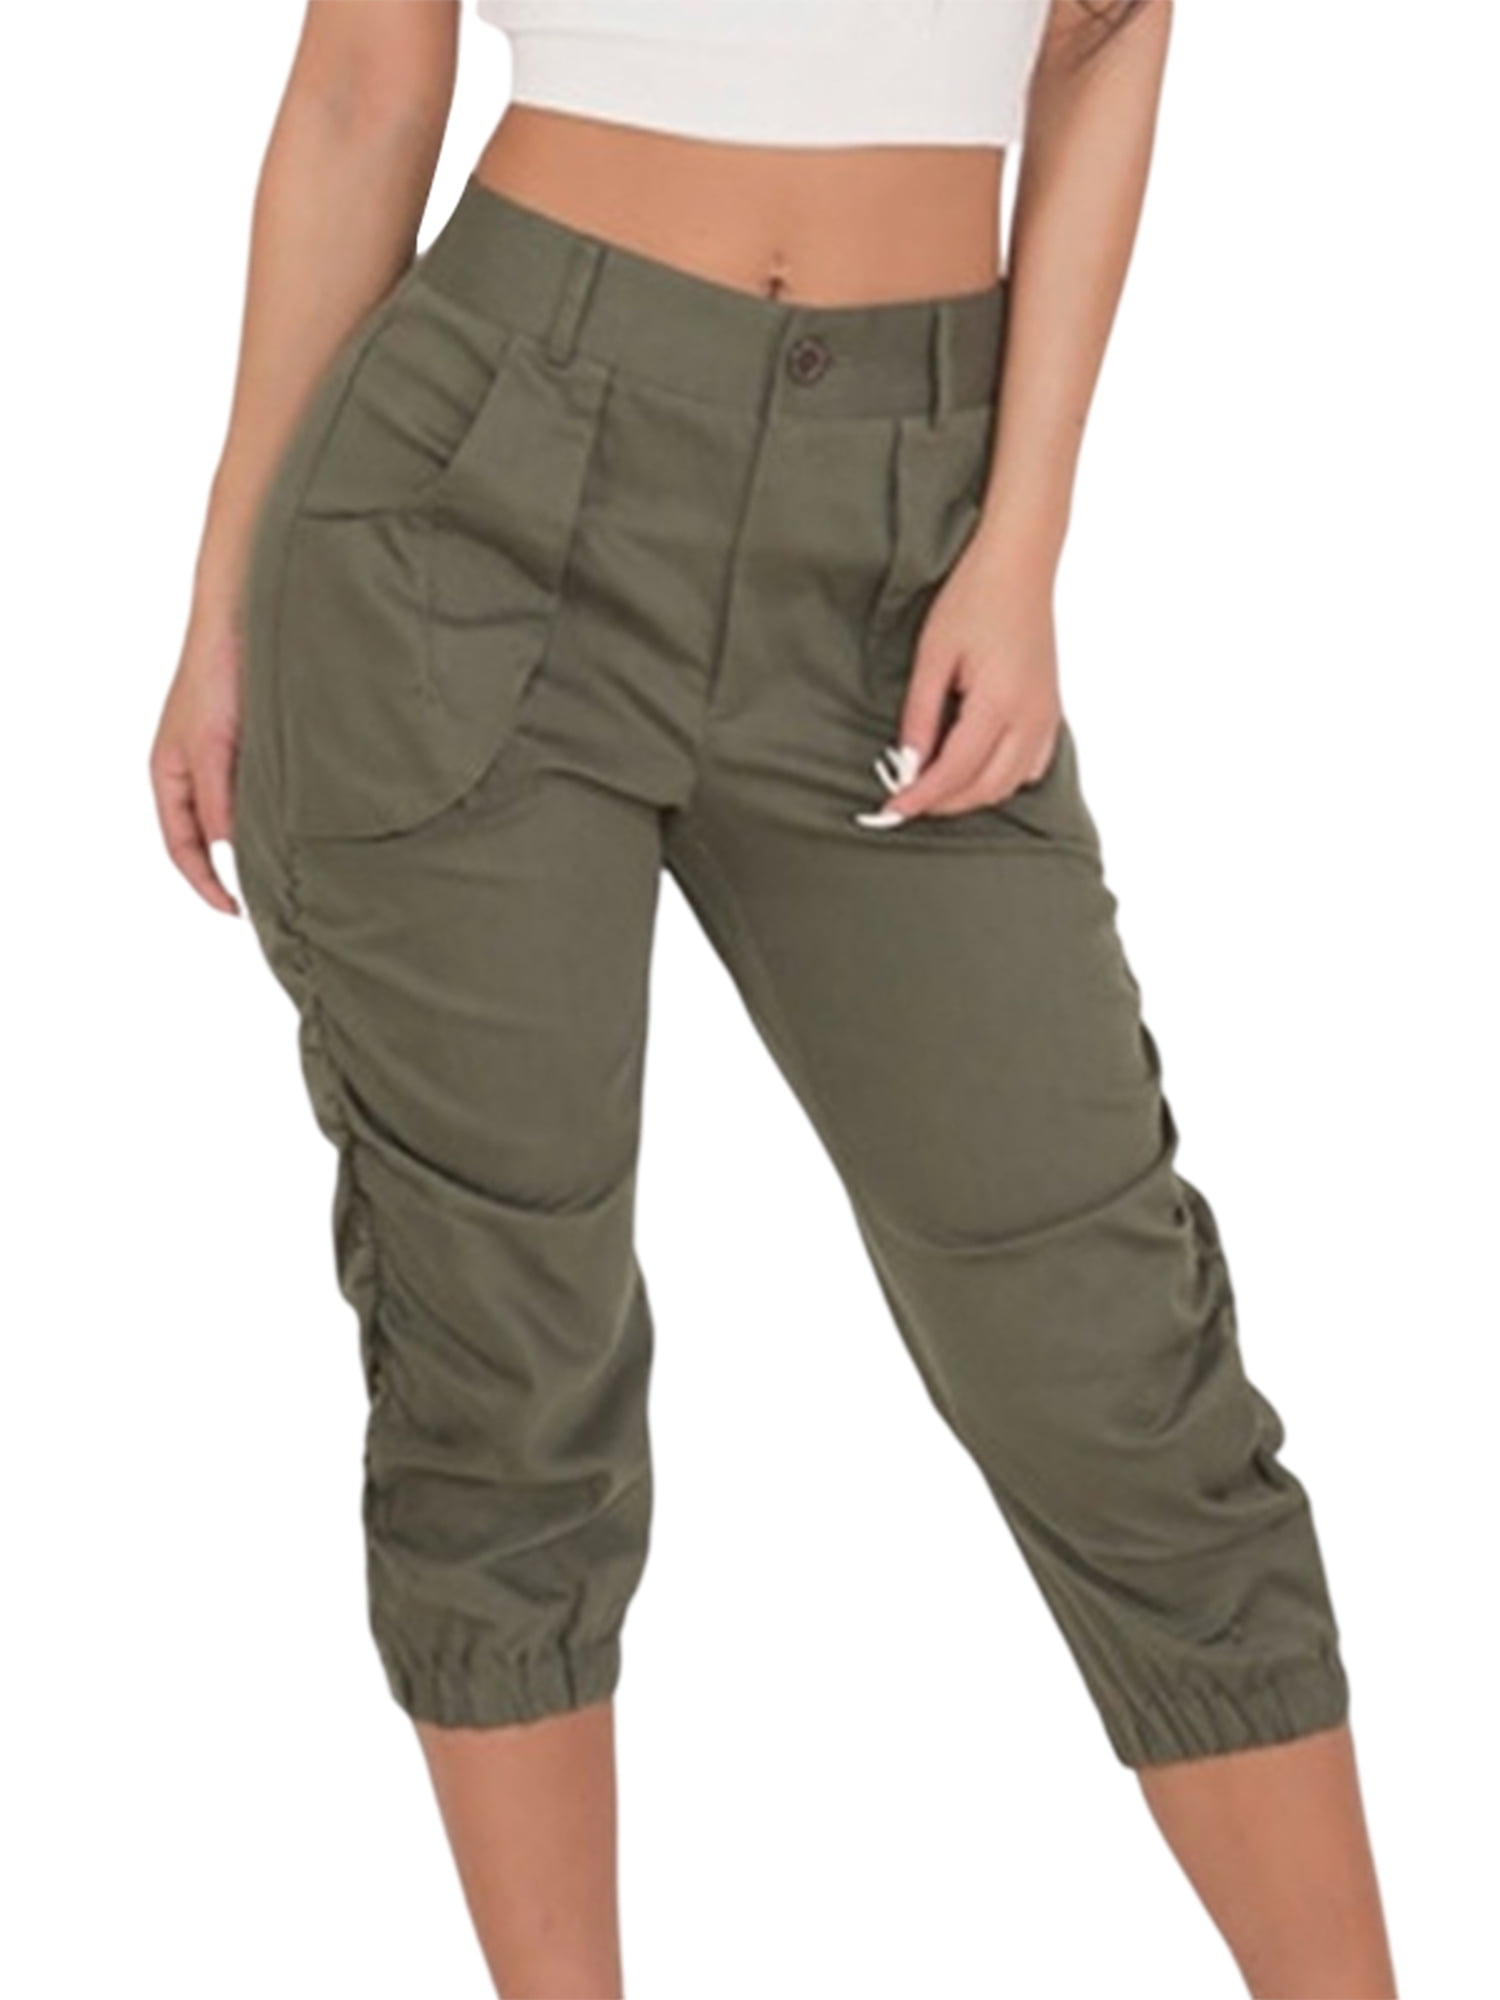 Frontwalk Beach Crop Pants Women High Waist Drawstring Casual Cargo Pants  Summer Holiday Capris Pants with Pockets S-3XL Green XL 